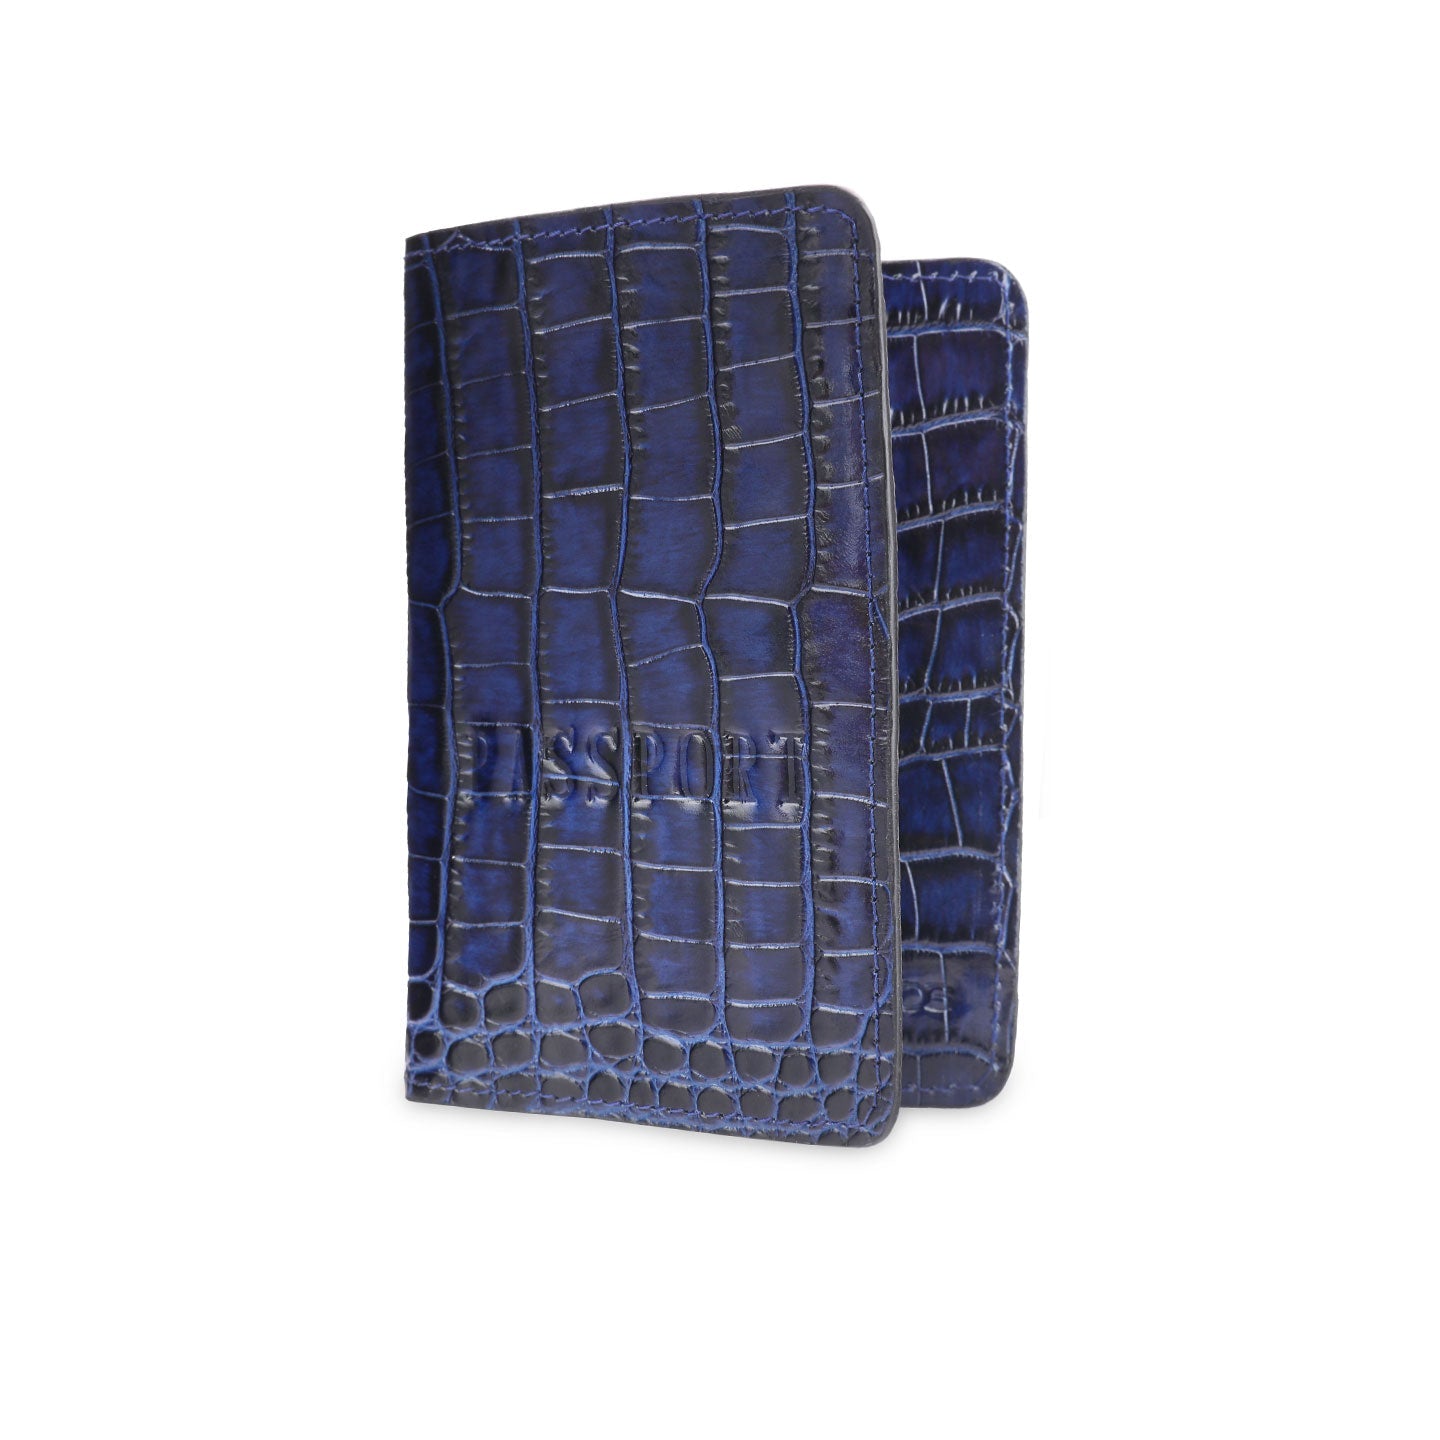 Blue leather passport case